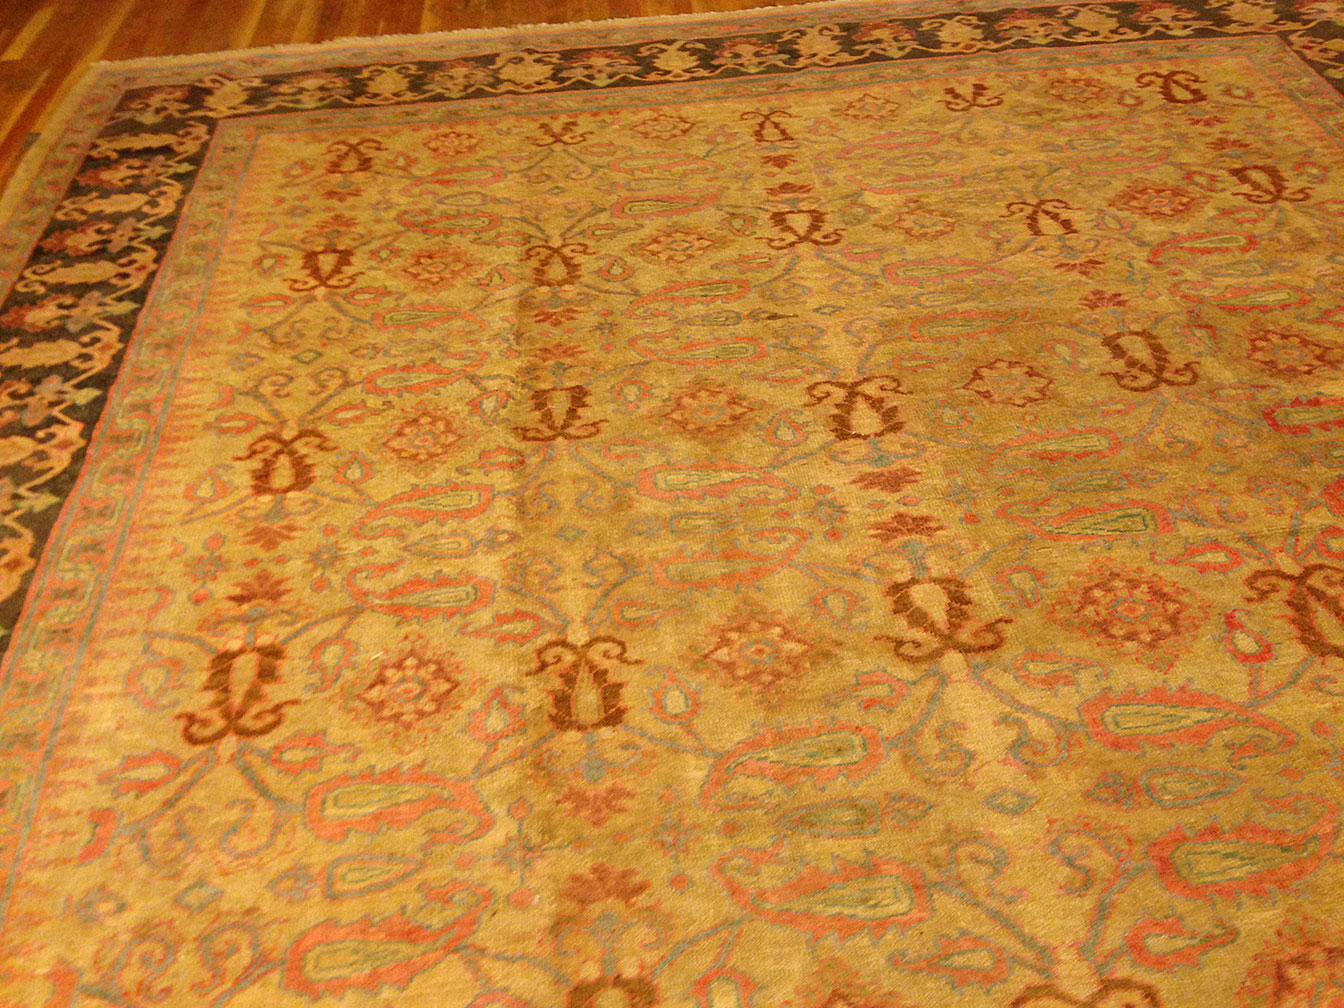 Antique amritsar Carpet - # 9631